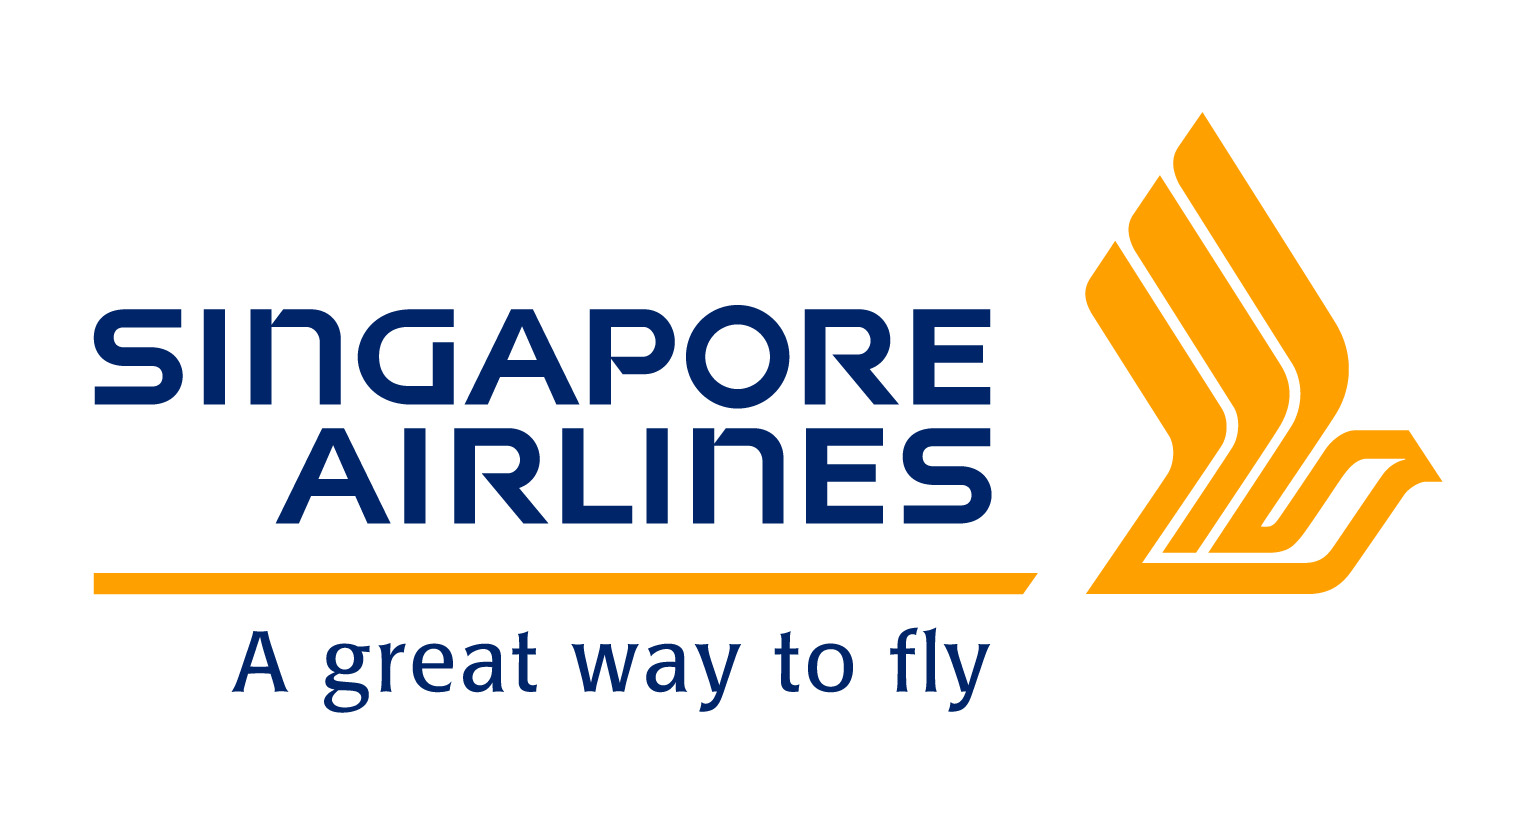 1. Singapore Airlines